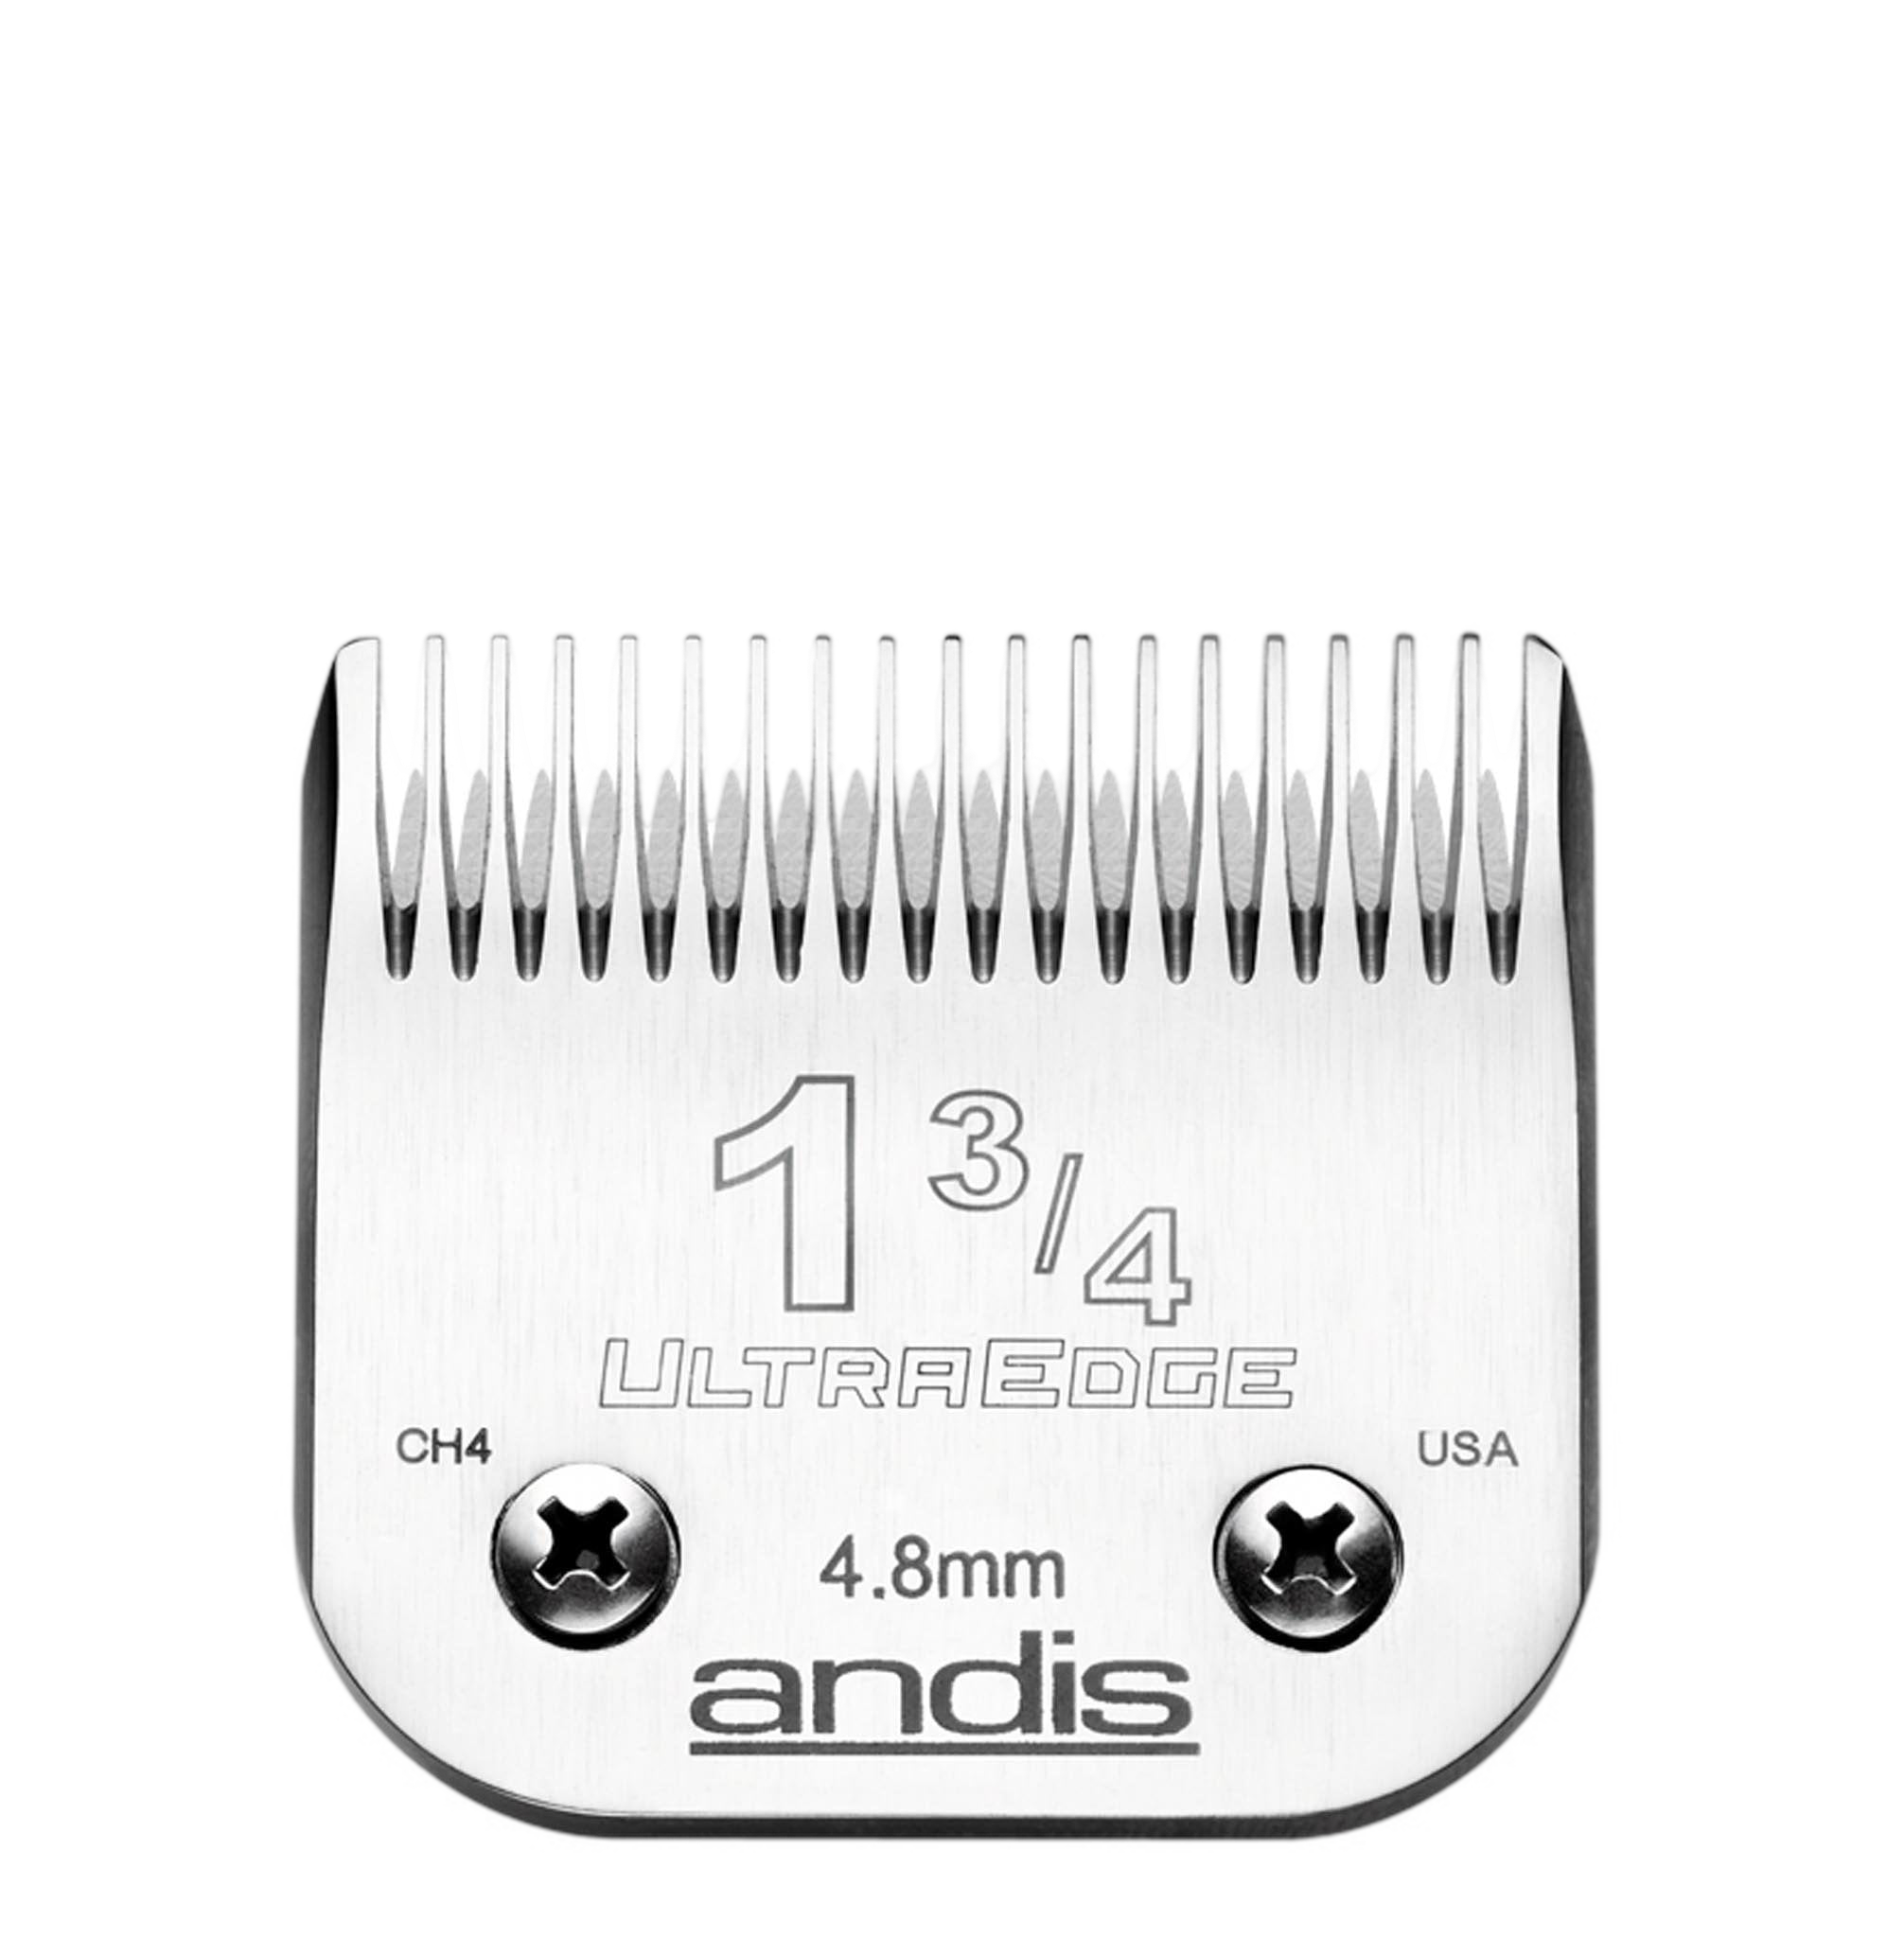 Andis UltraEdge ekstrablad - fra 0.1 til 6.3 mm 4.8 mm - 1 3/4